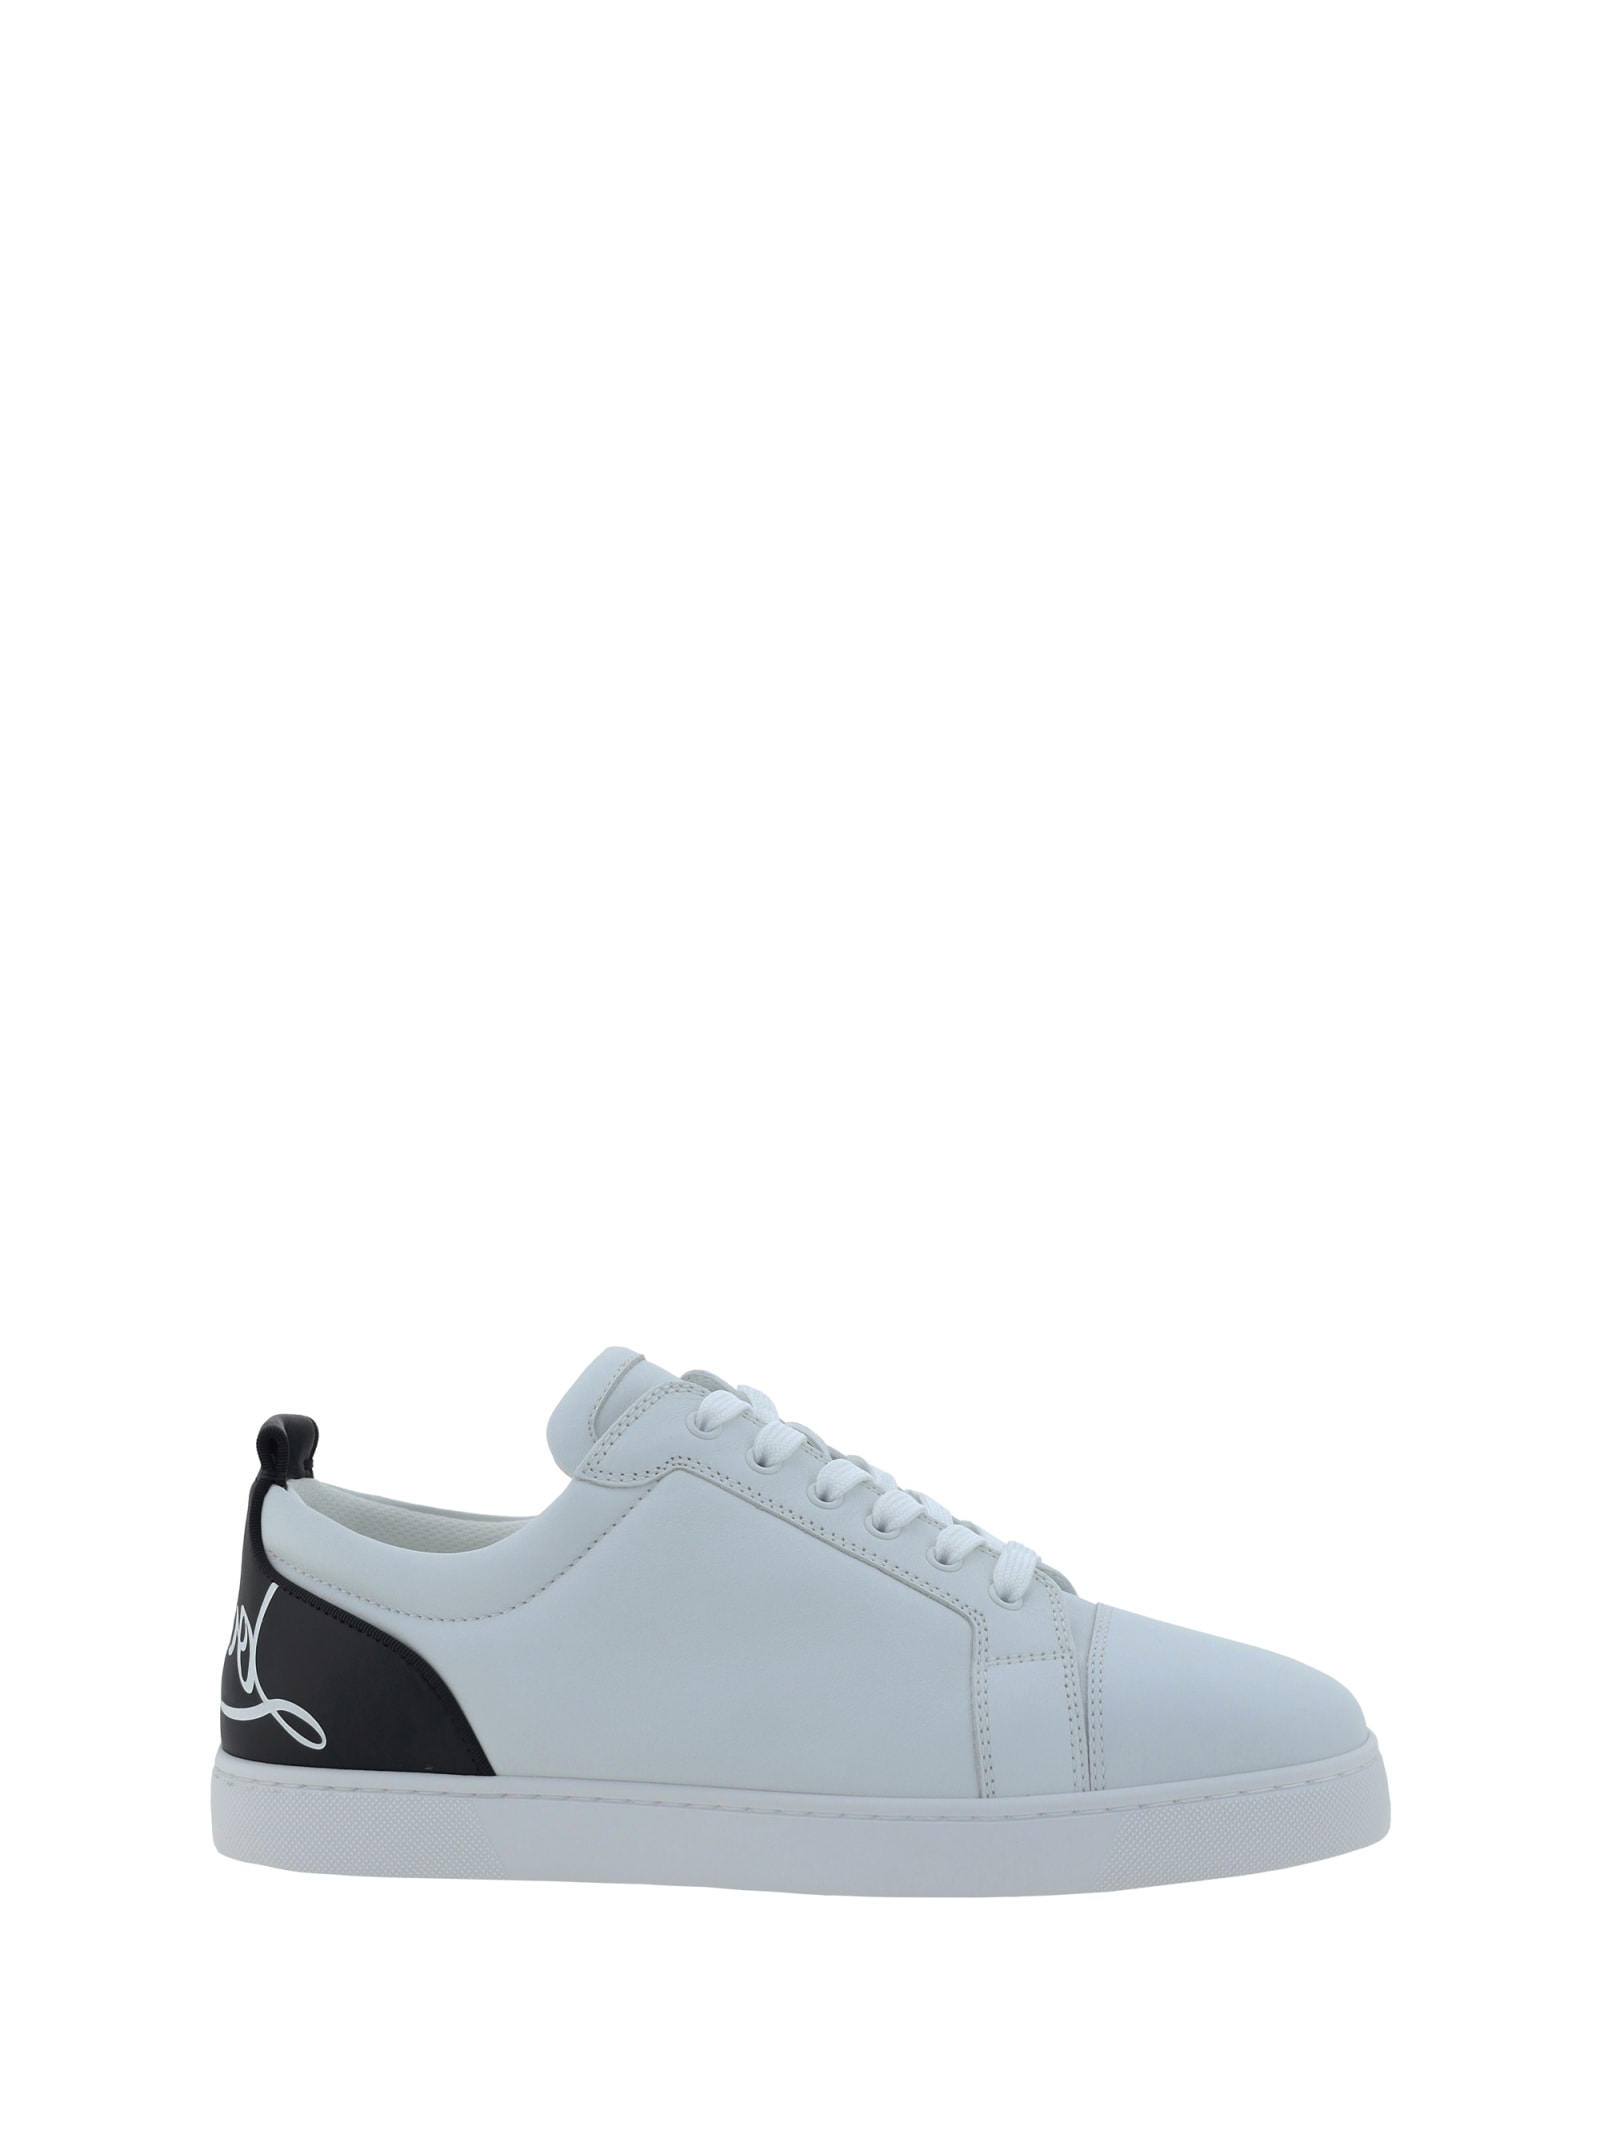 Shop Christian Louboutin Fun Louis Junior Sneakers In White/black